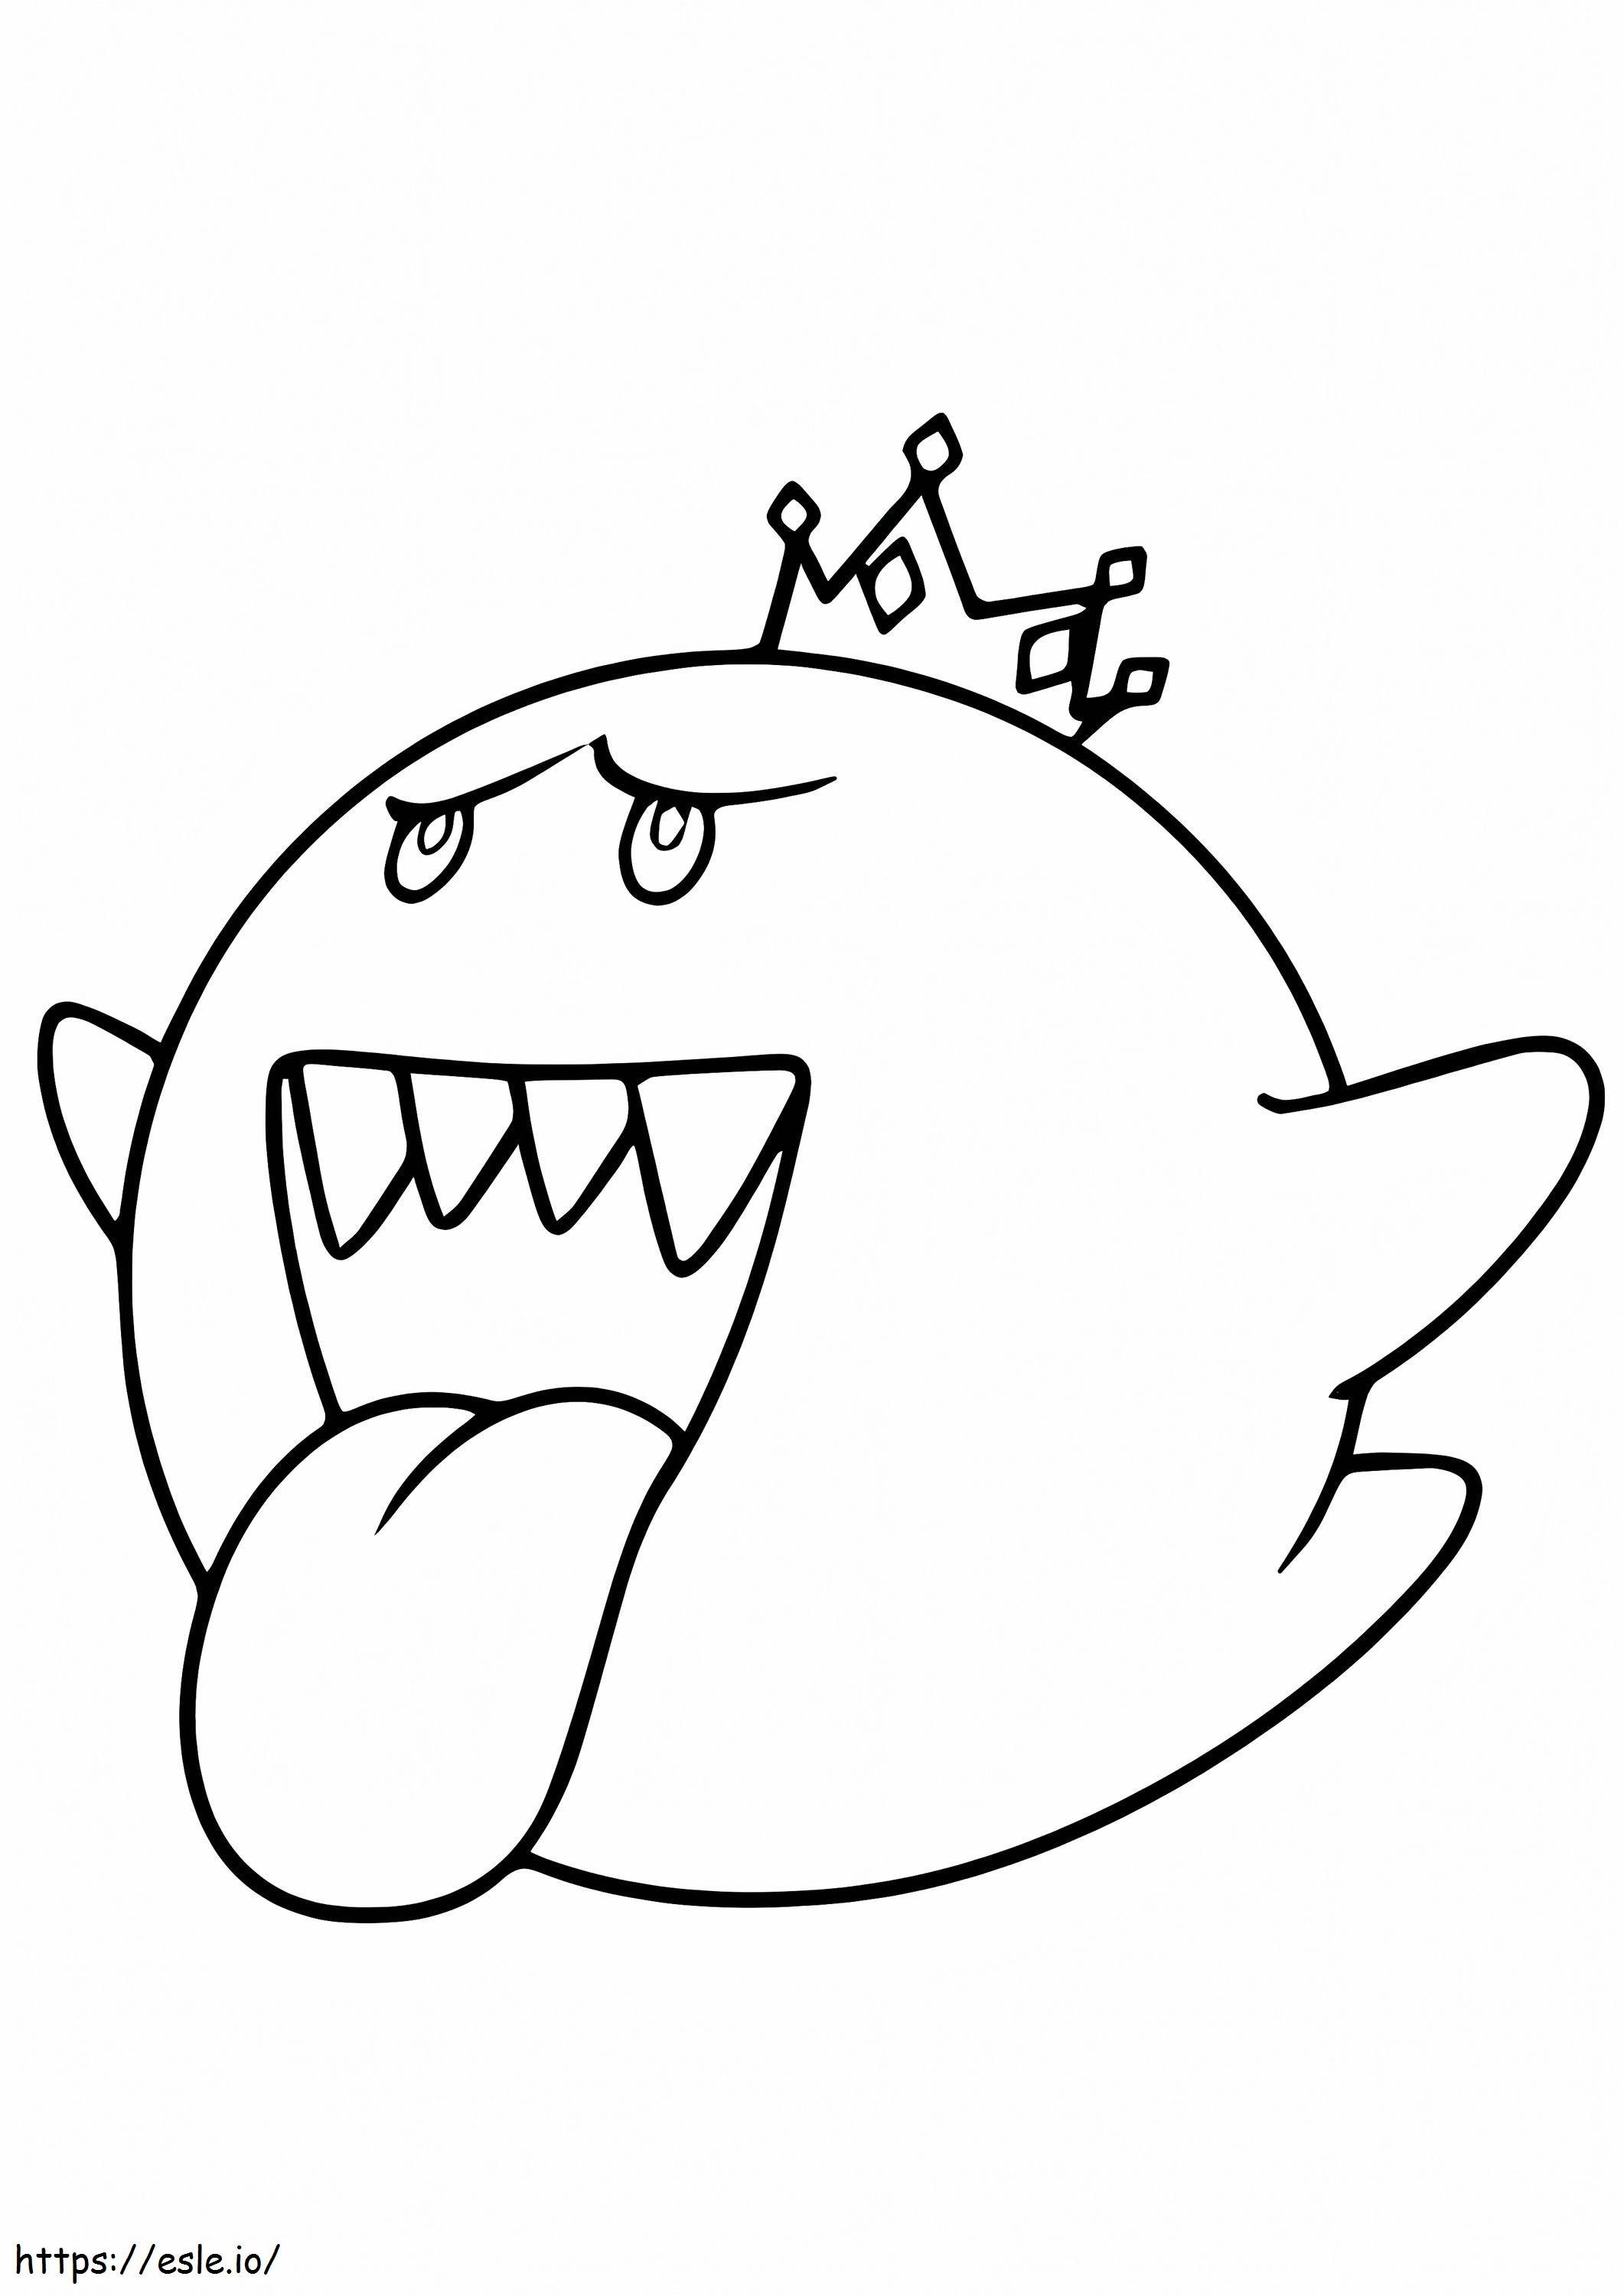 Mario Kart King Boo ausmalbilder